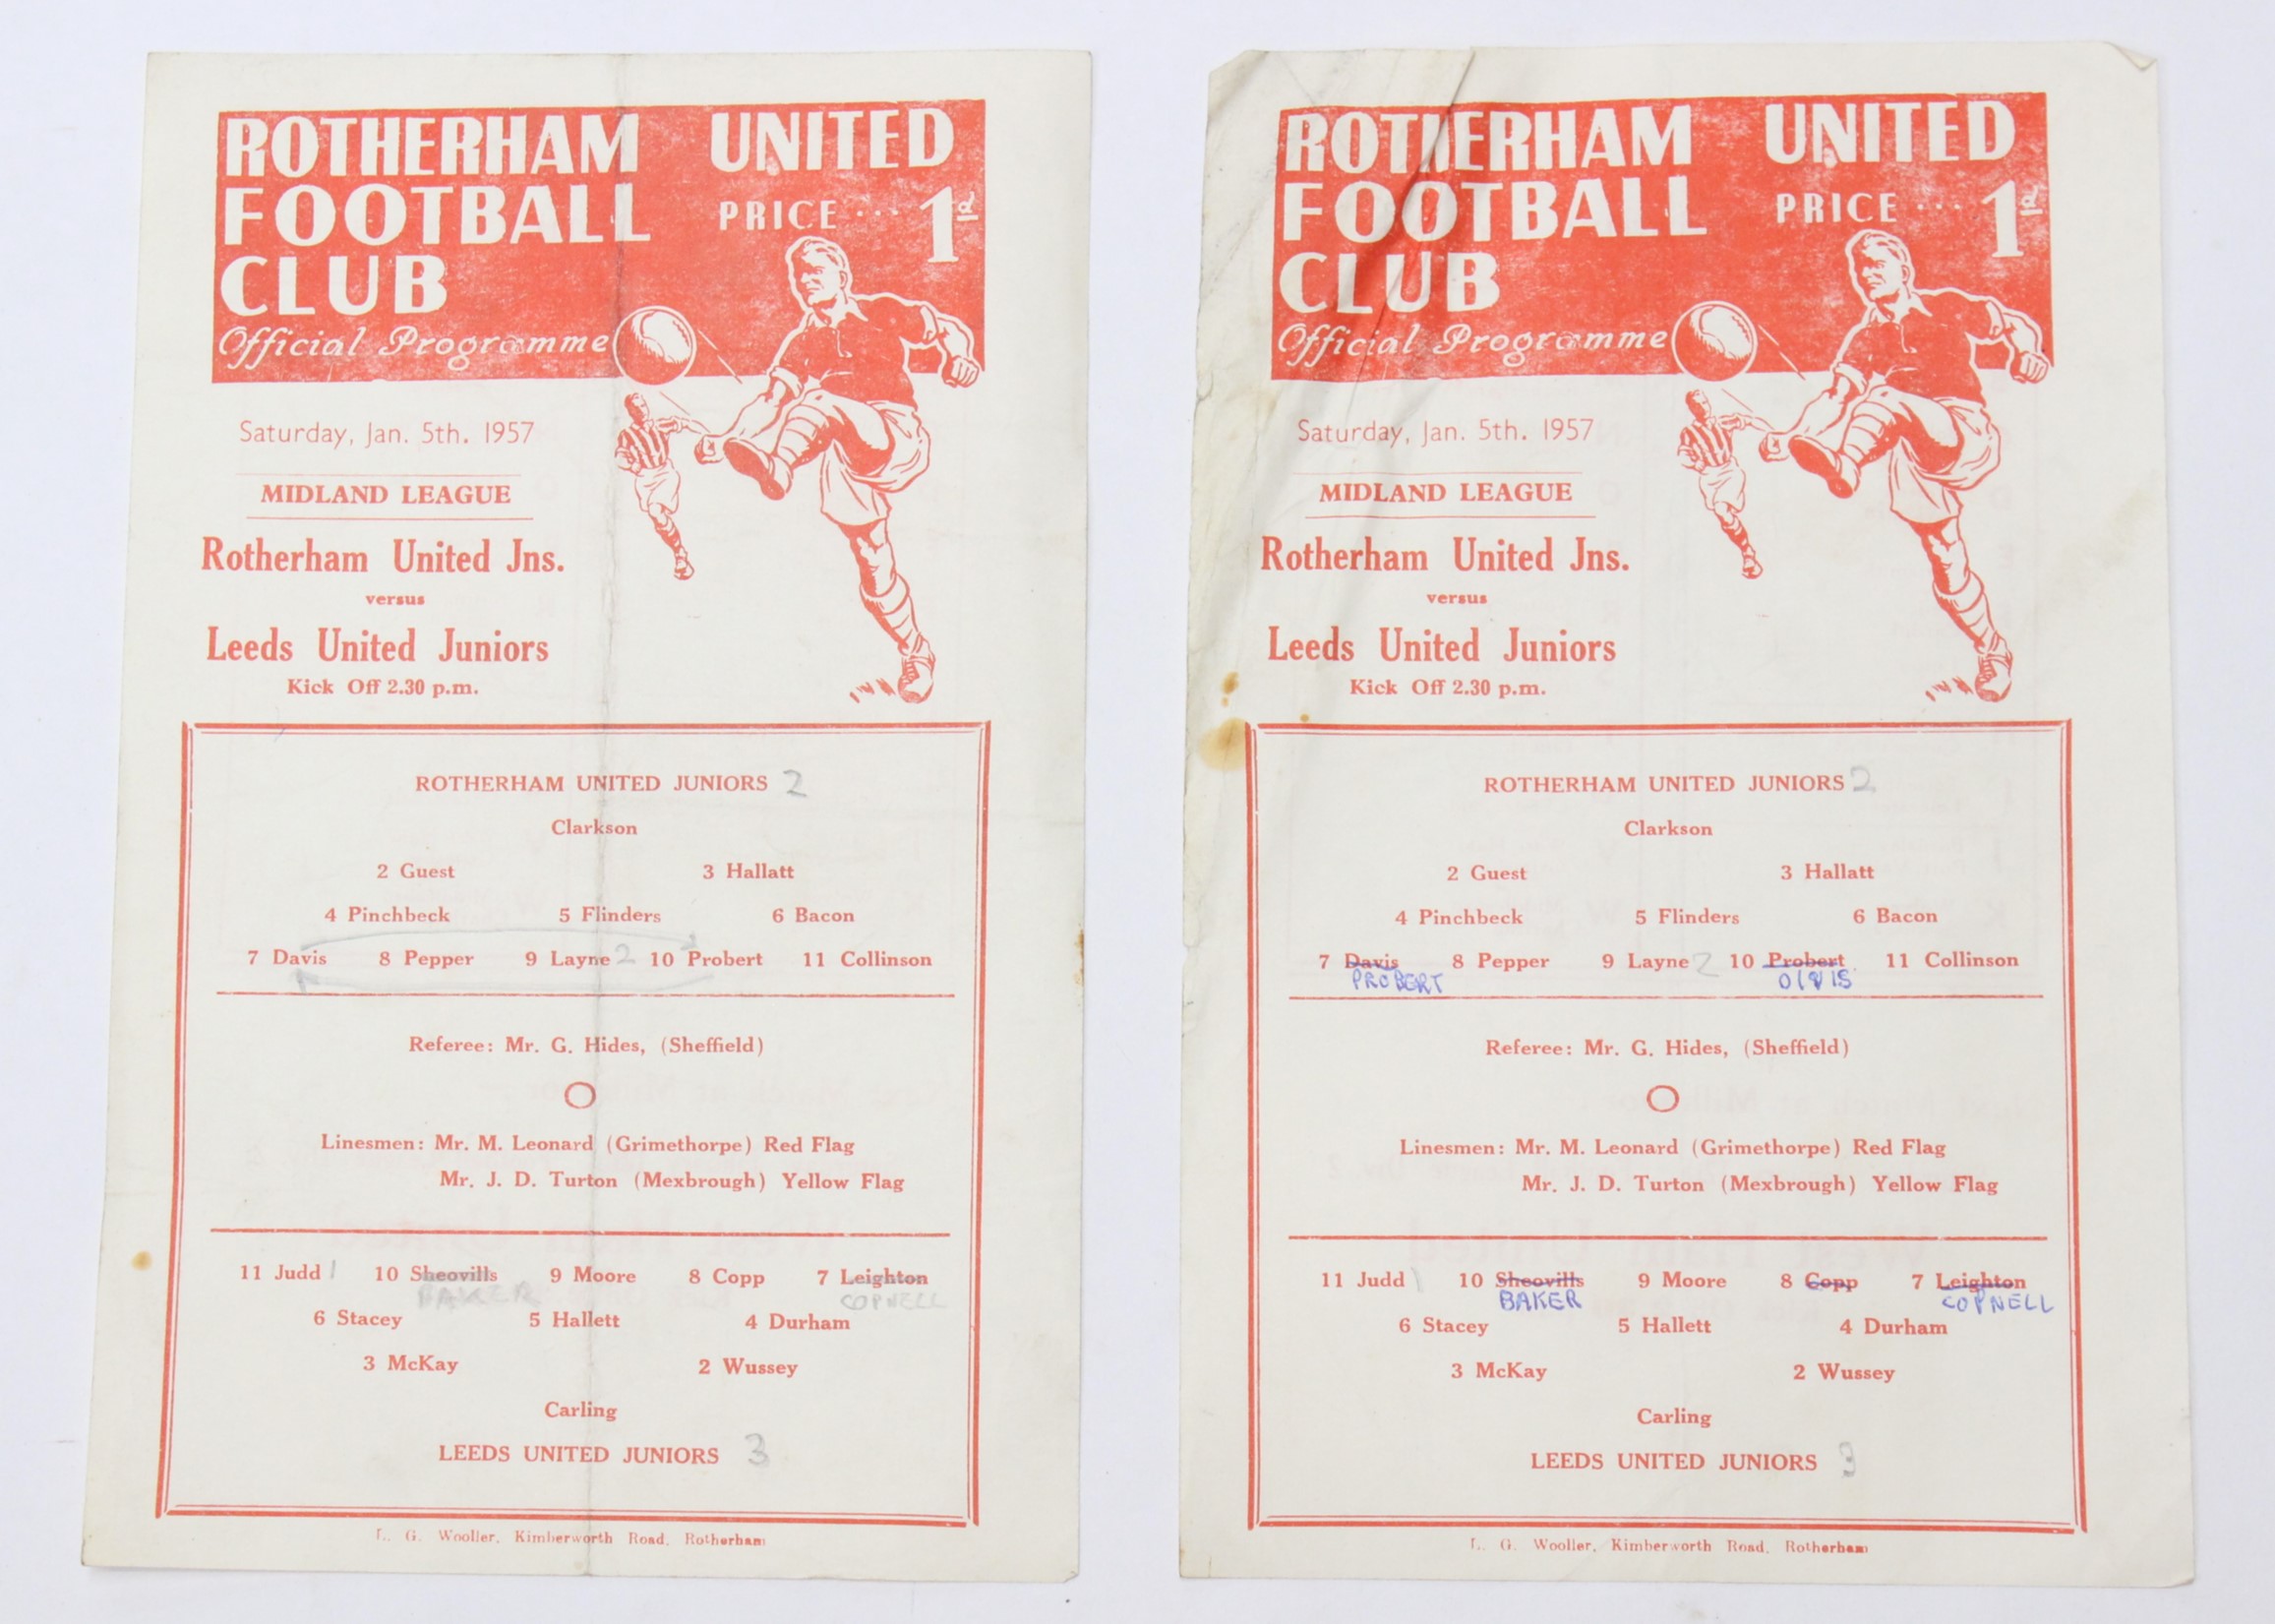 Rotherham United: A pair of Rotherham United Juniors v. Leeds United Juniors single-sheet match